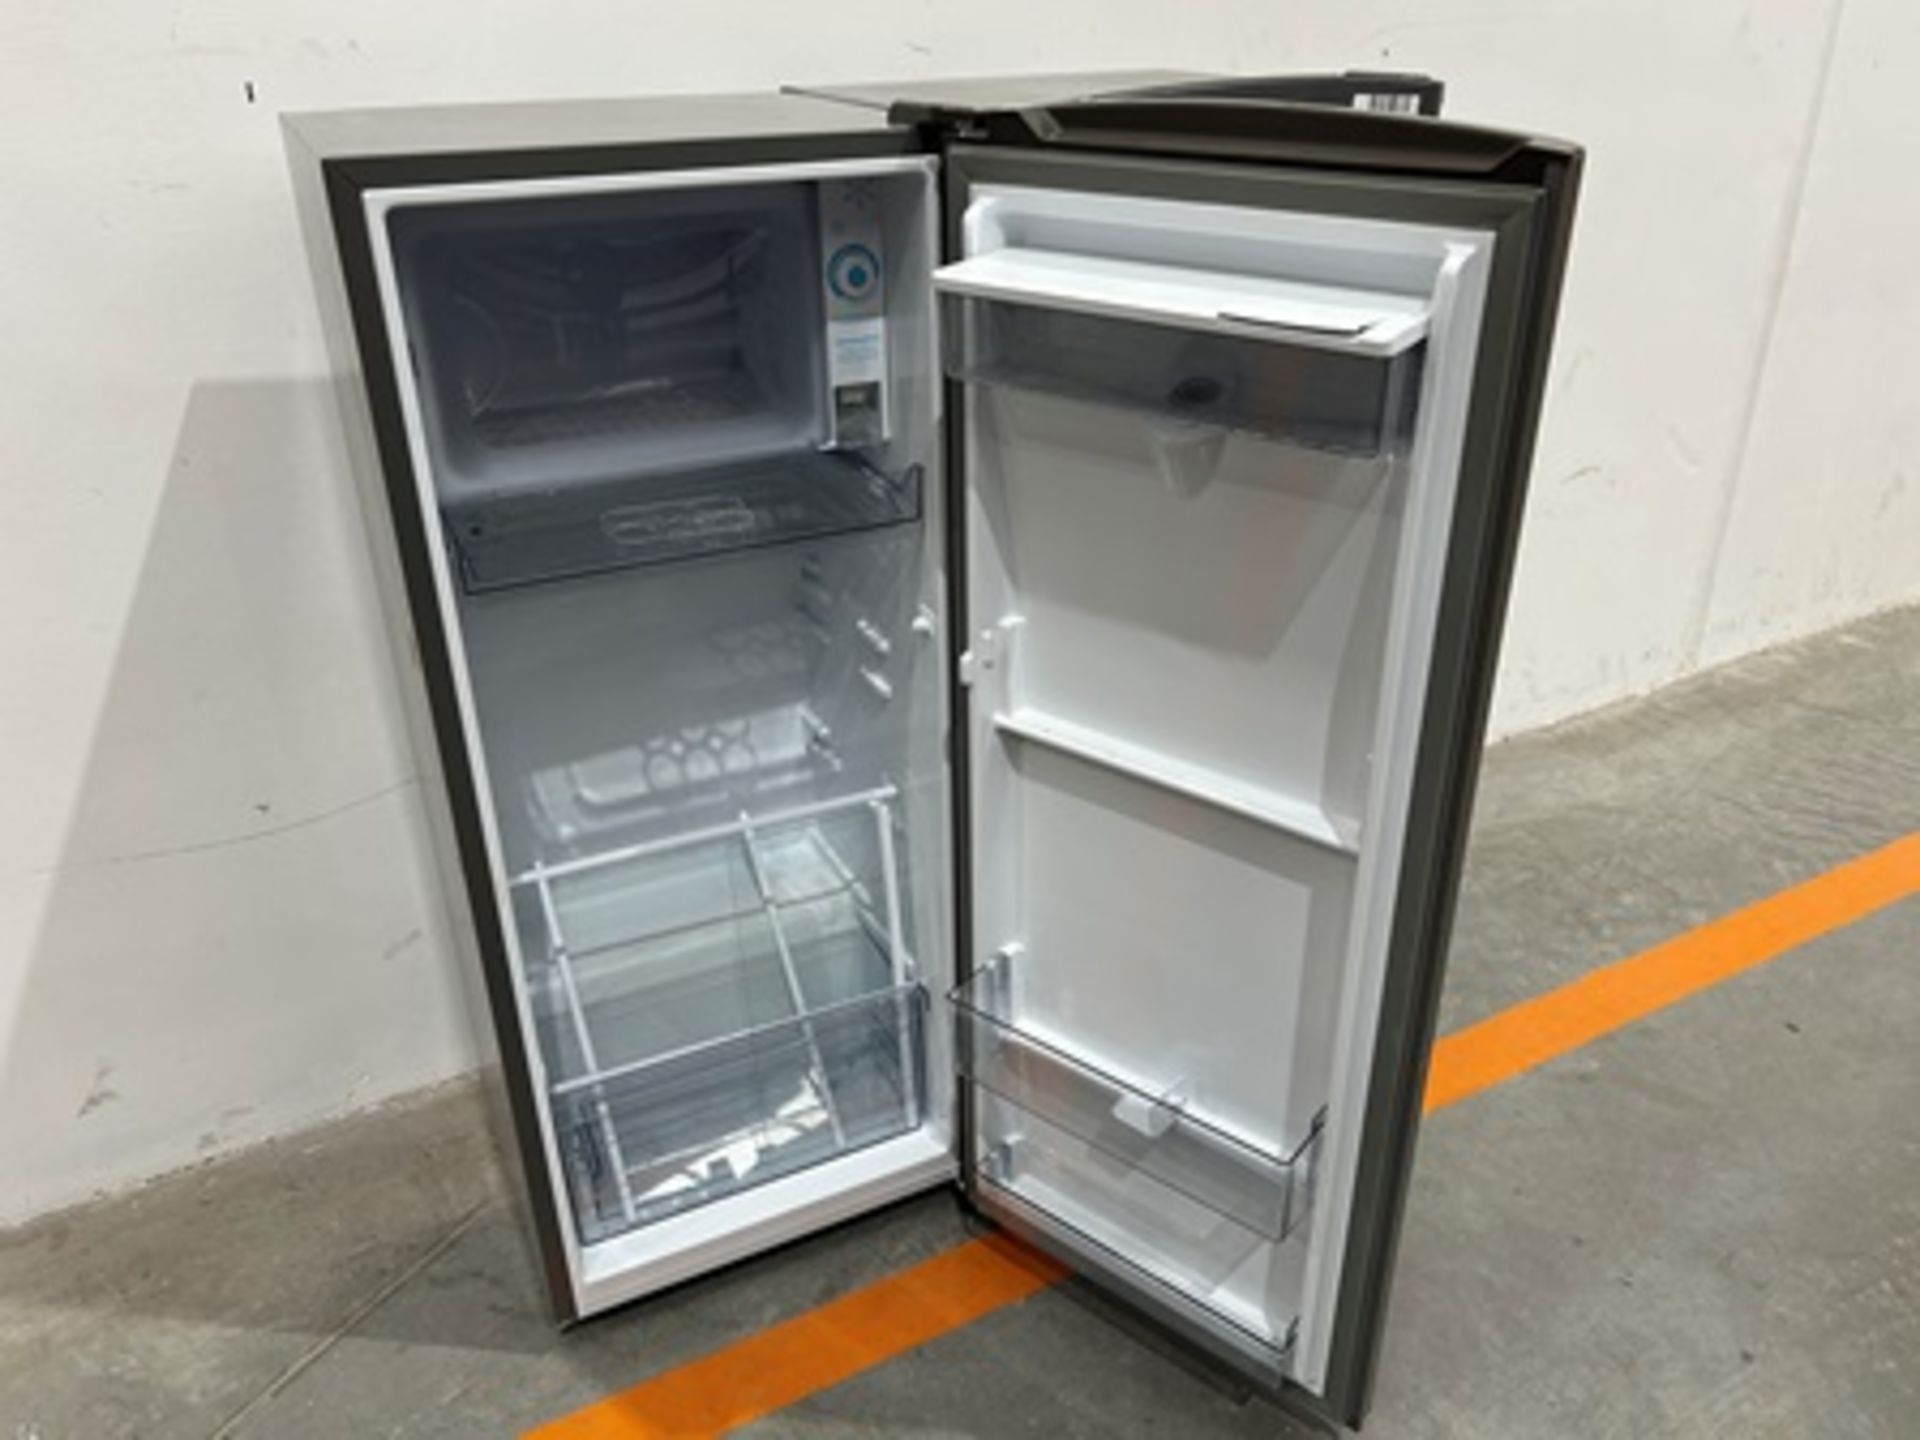 Lote de 2 refrigeradores contiene: 1 refrigerador Marca HISENSE, Modelo RR63D6WGX, Serie E20878, Co - Image 5 of 11